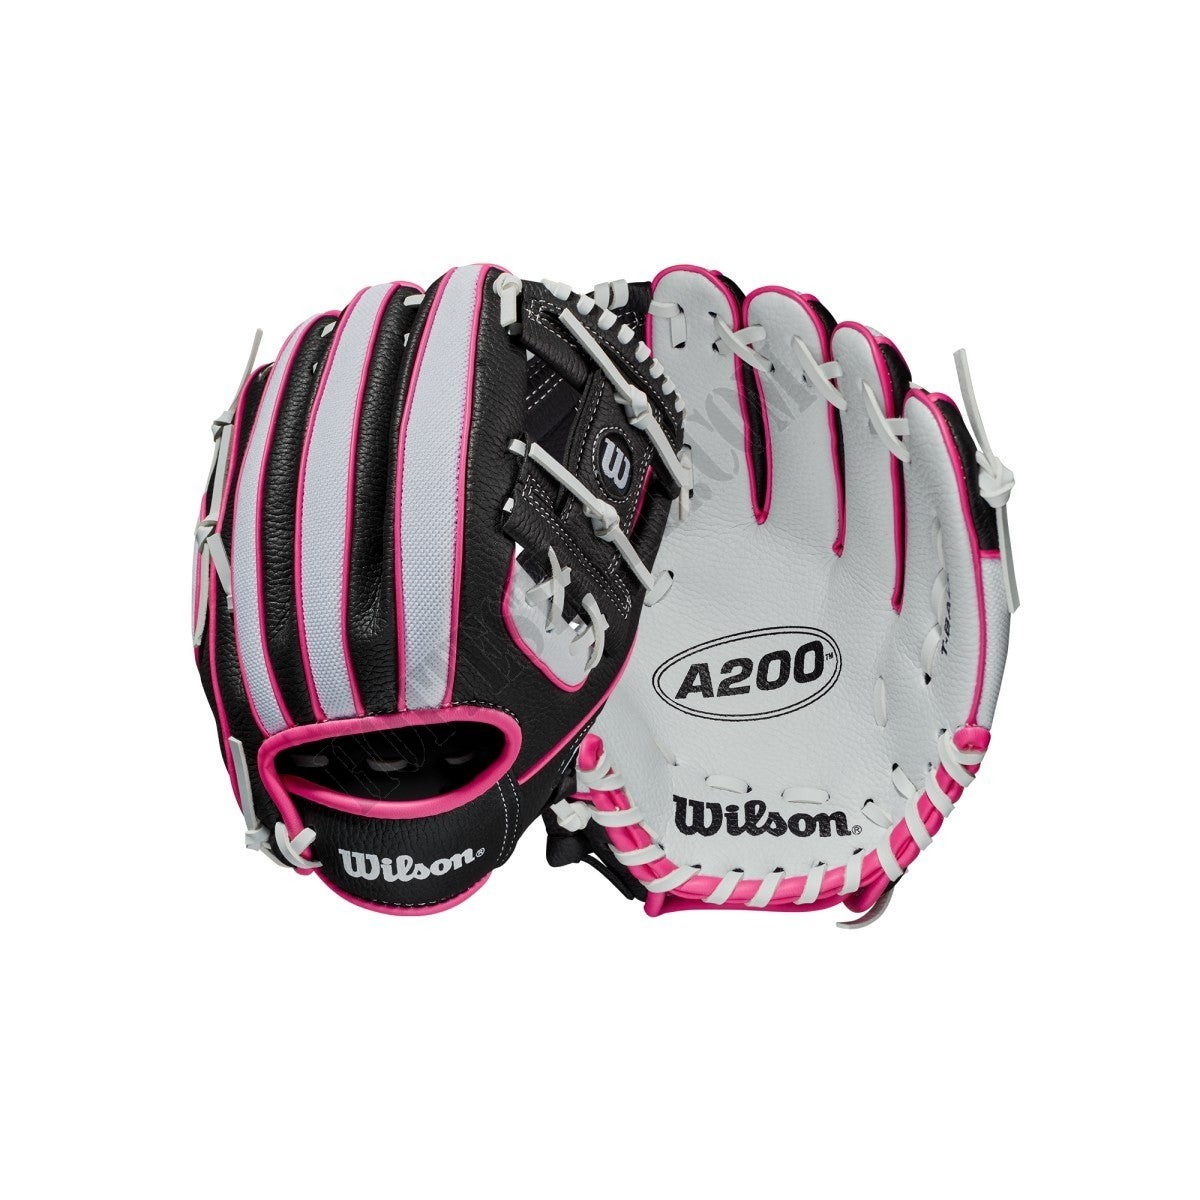 2021 A200 10" T-Ball Glove - White/Black/Pink ● Wilson Promotions - 2021 A200 10" T-Ball Glove - White/Black/Pink ● Wilson Promotions